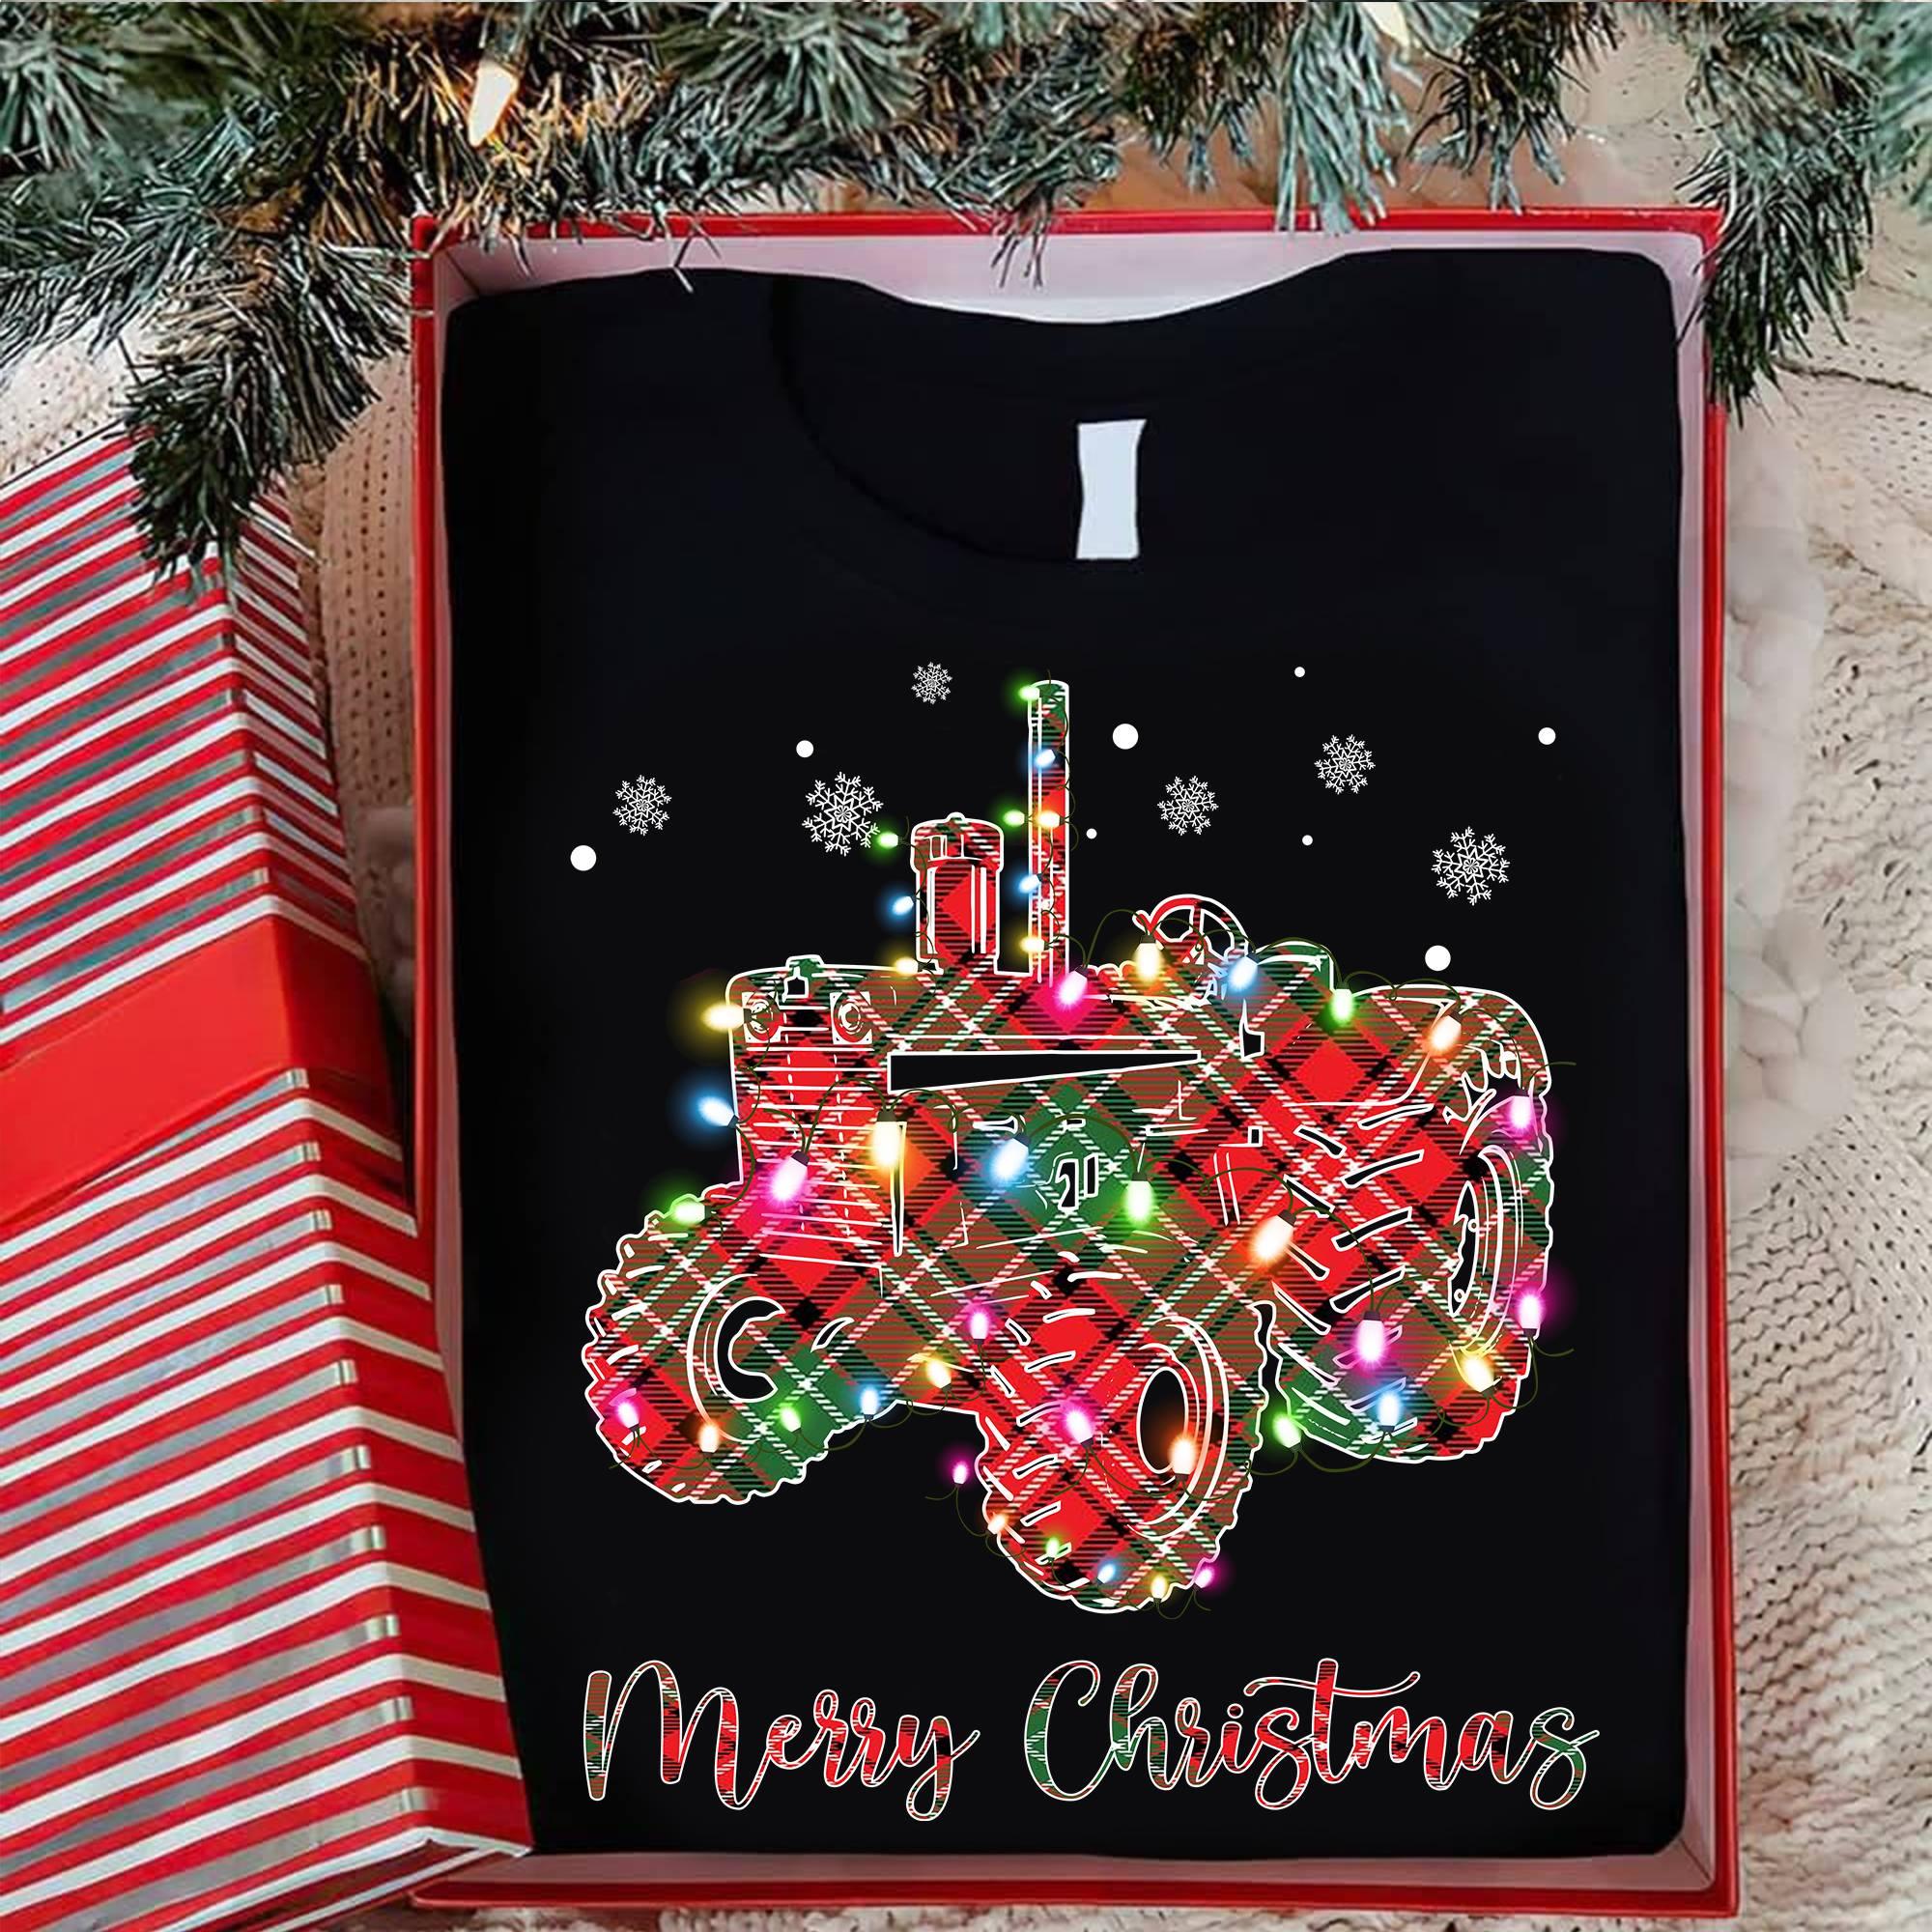 Merry Christmas - Christmas tractor decoration, Christmas ugly sweater